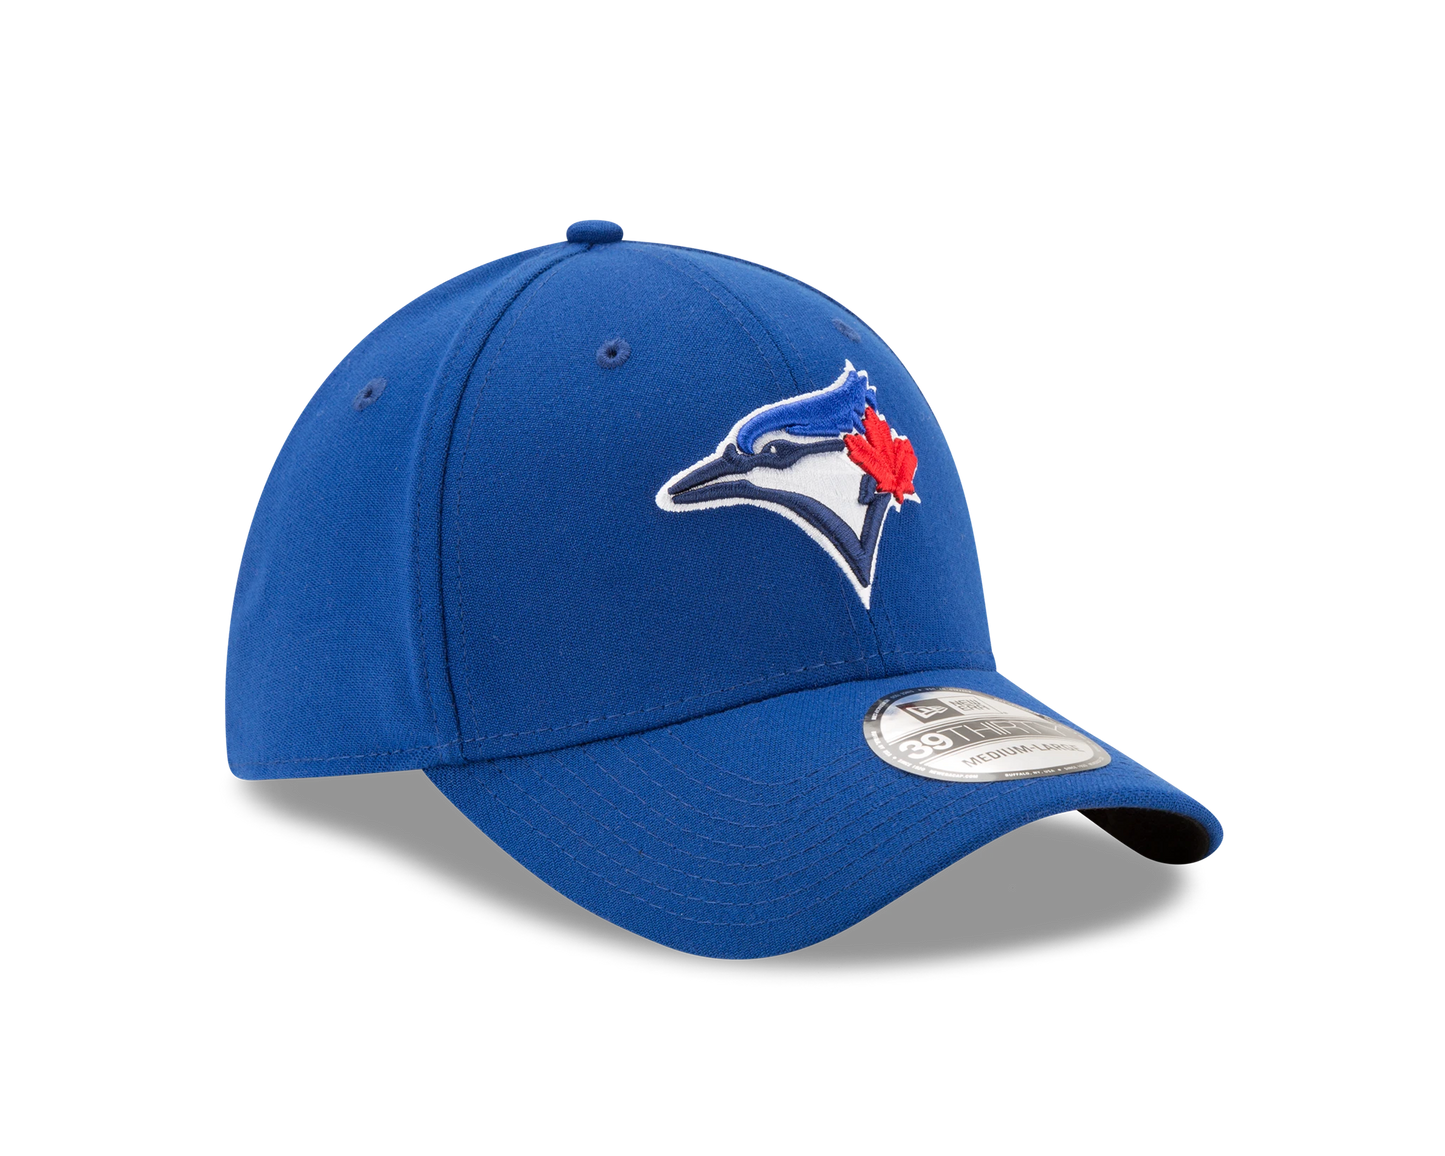 MLB Toddler/Child Hat 3930 Team Classic Game Blue Jays